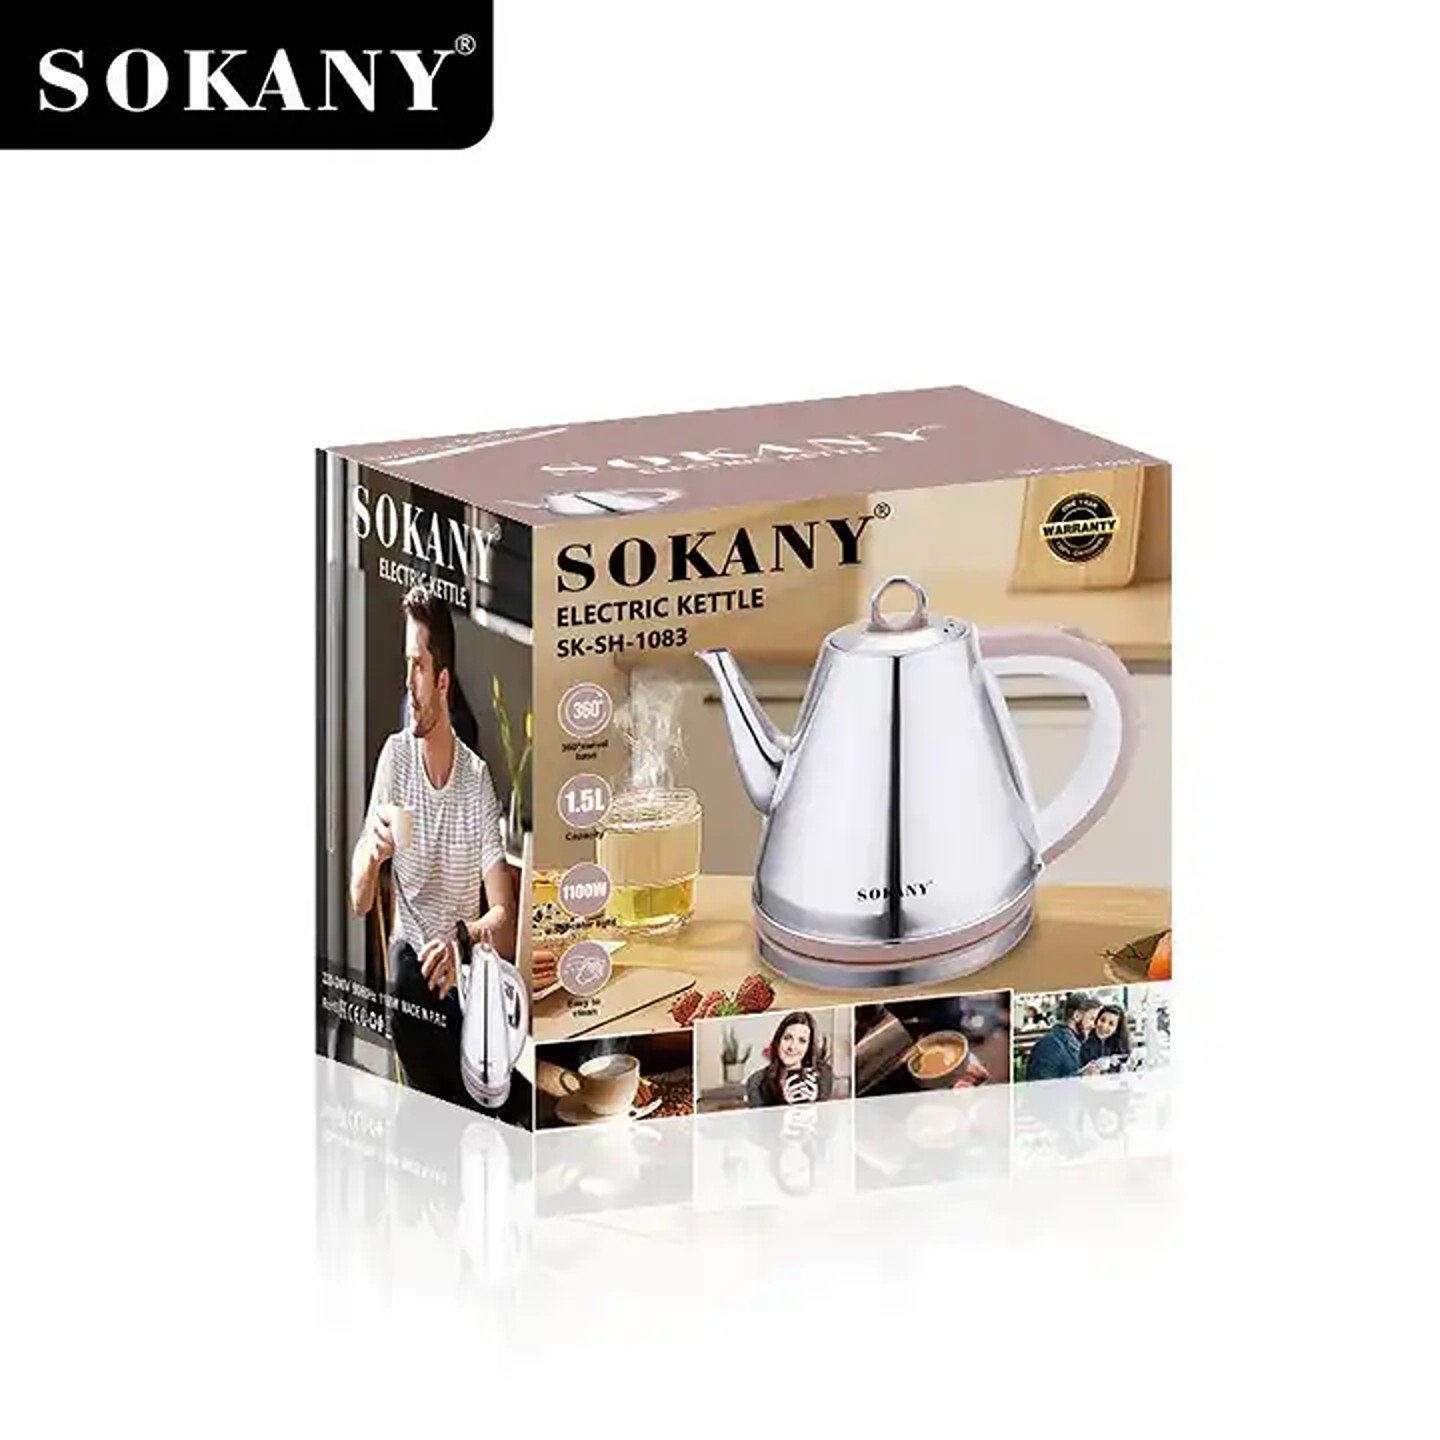 Sokany Electric kettle SK-SH-1083